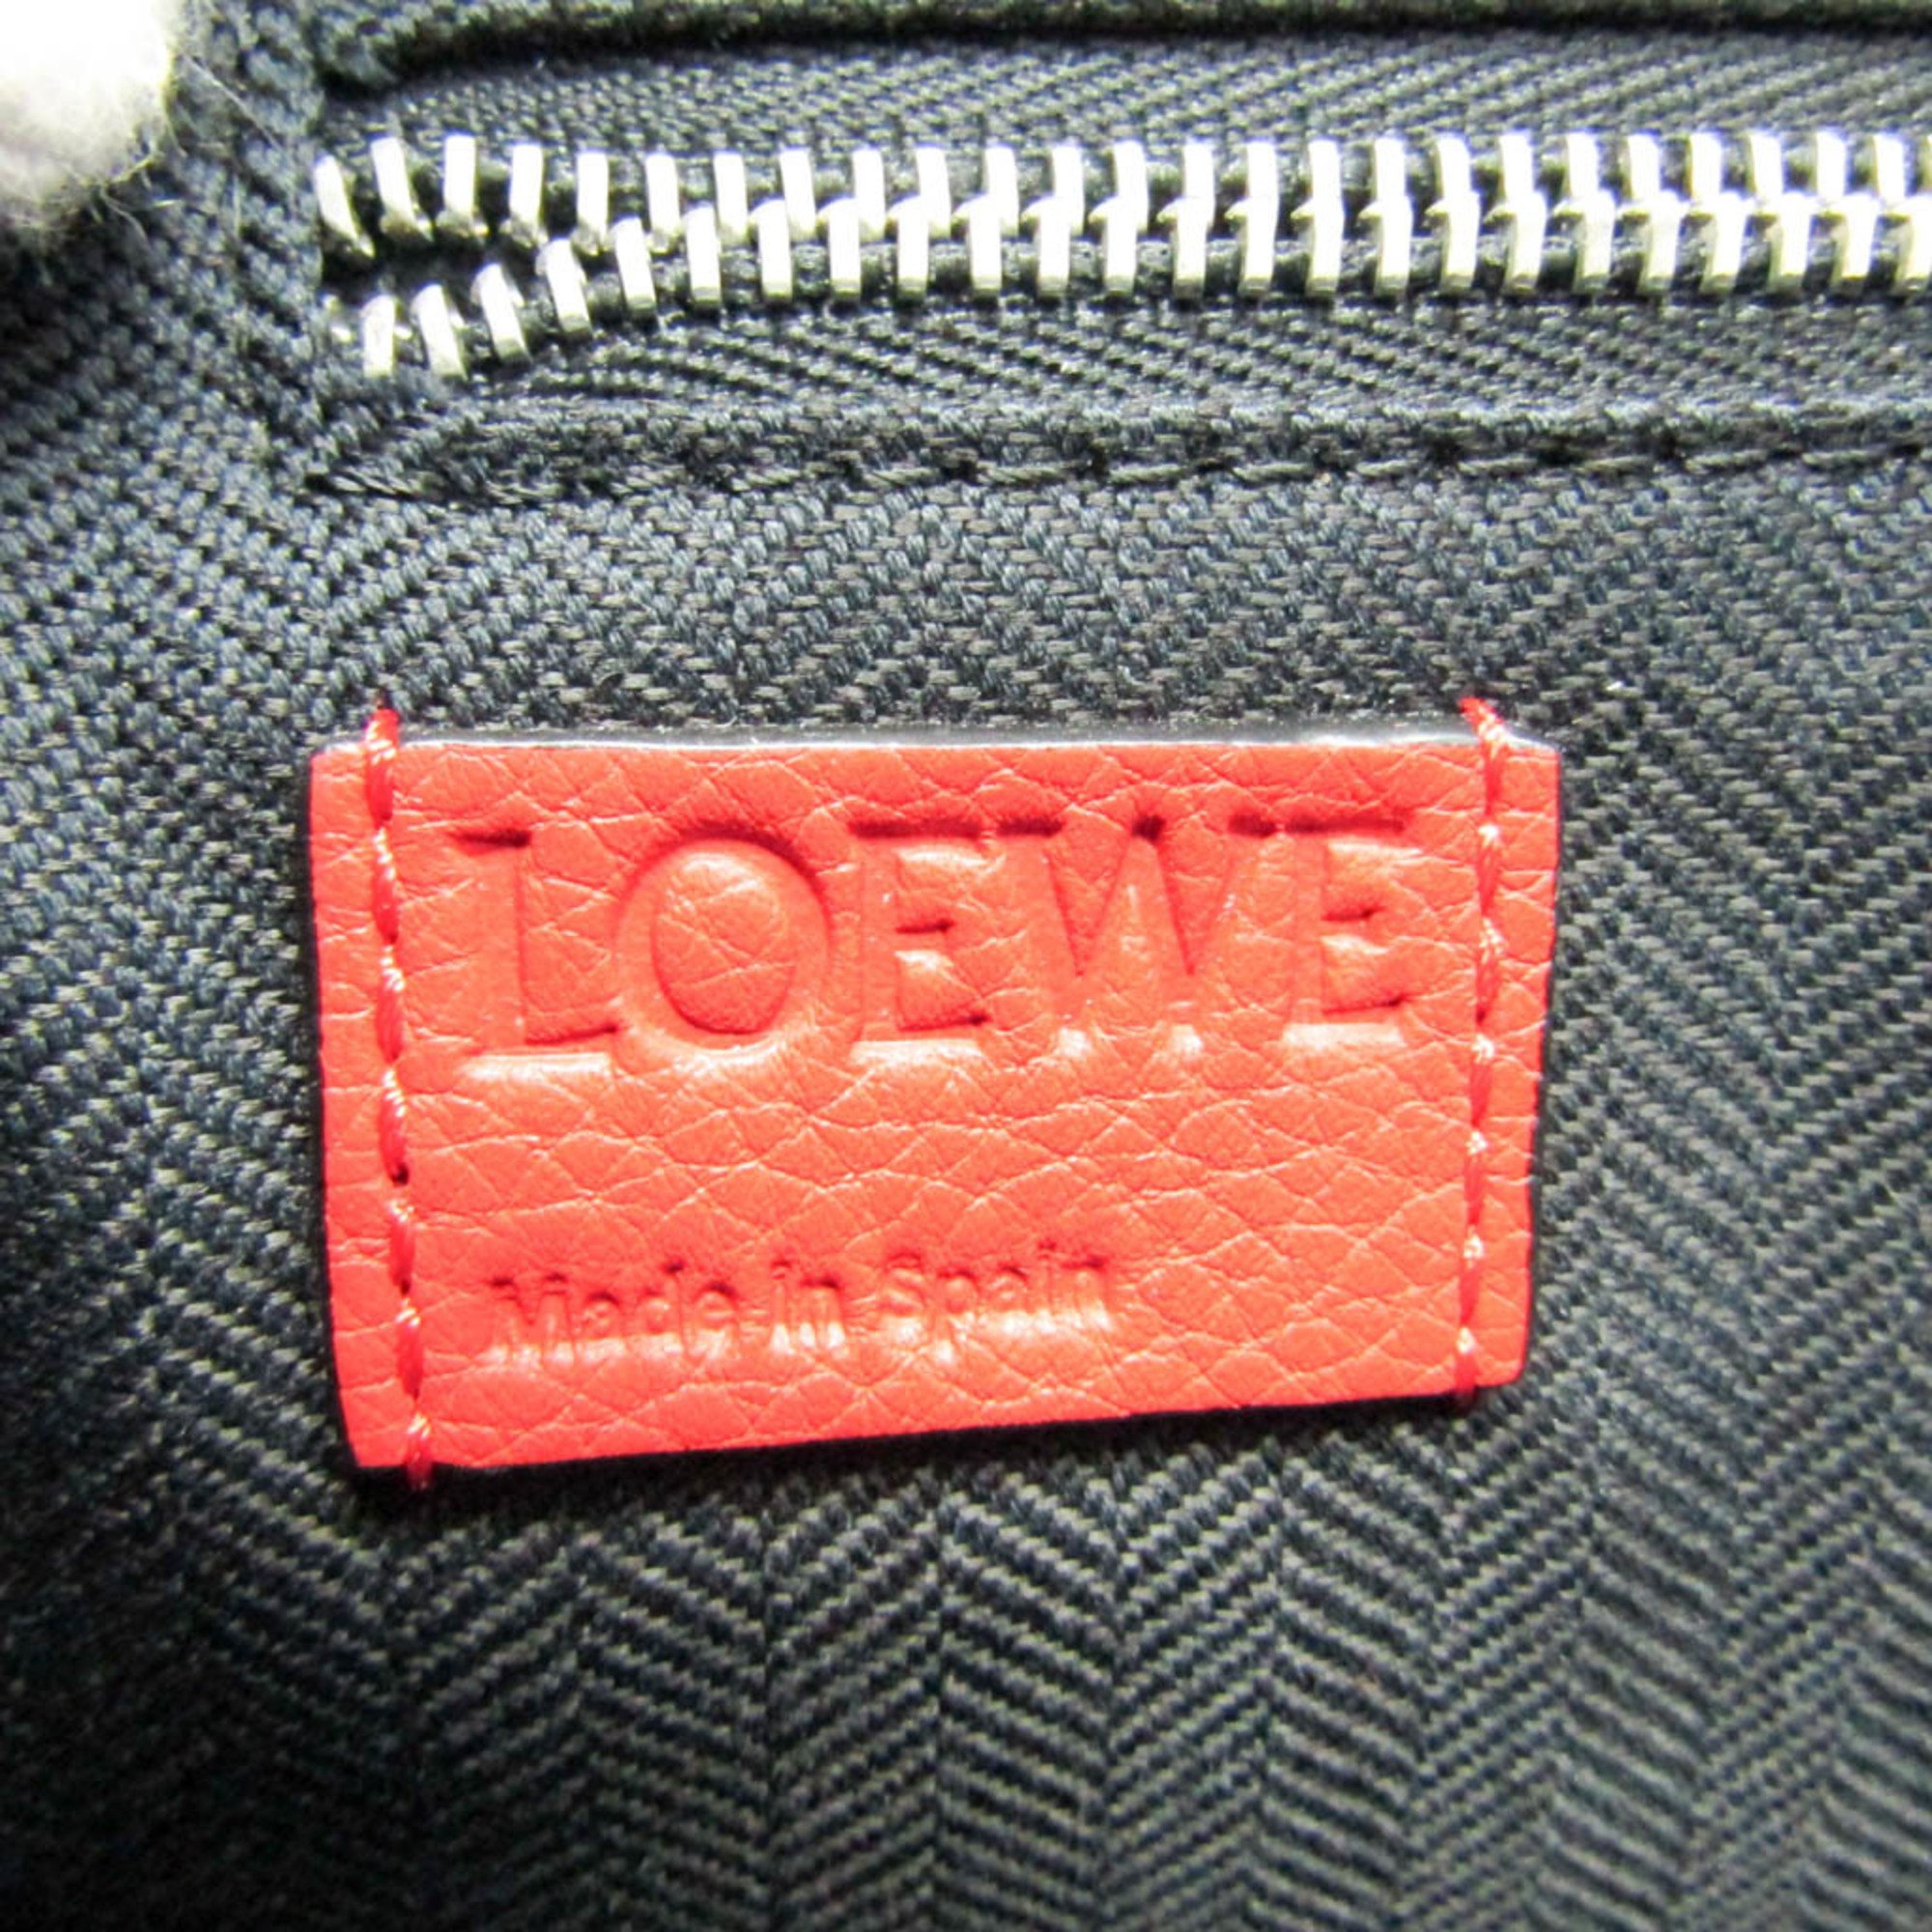 Loewe Goya Small 307.12UU15 Women's Leather Backpack Red Color